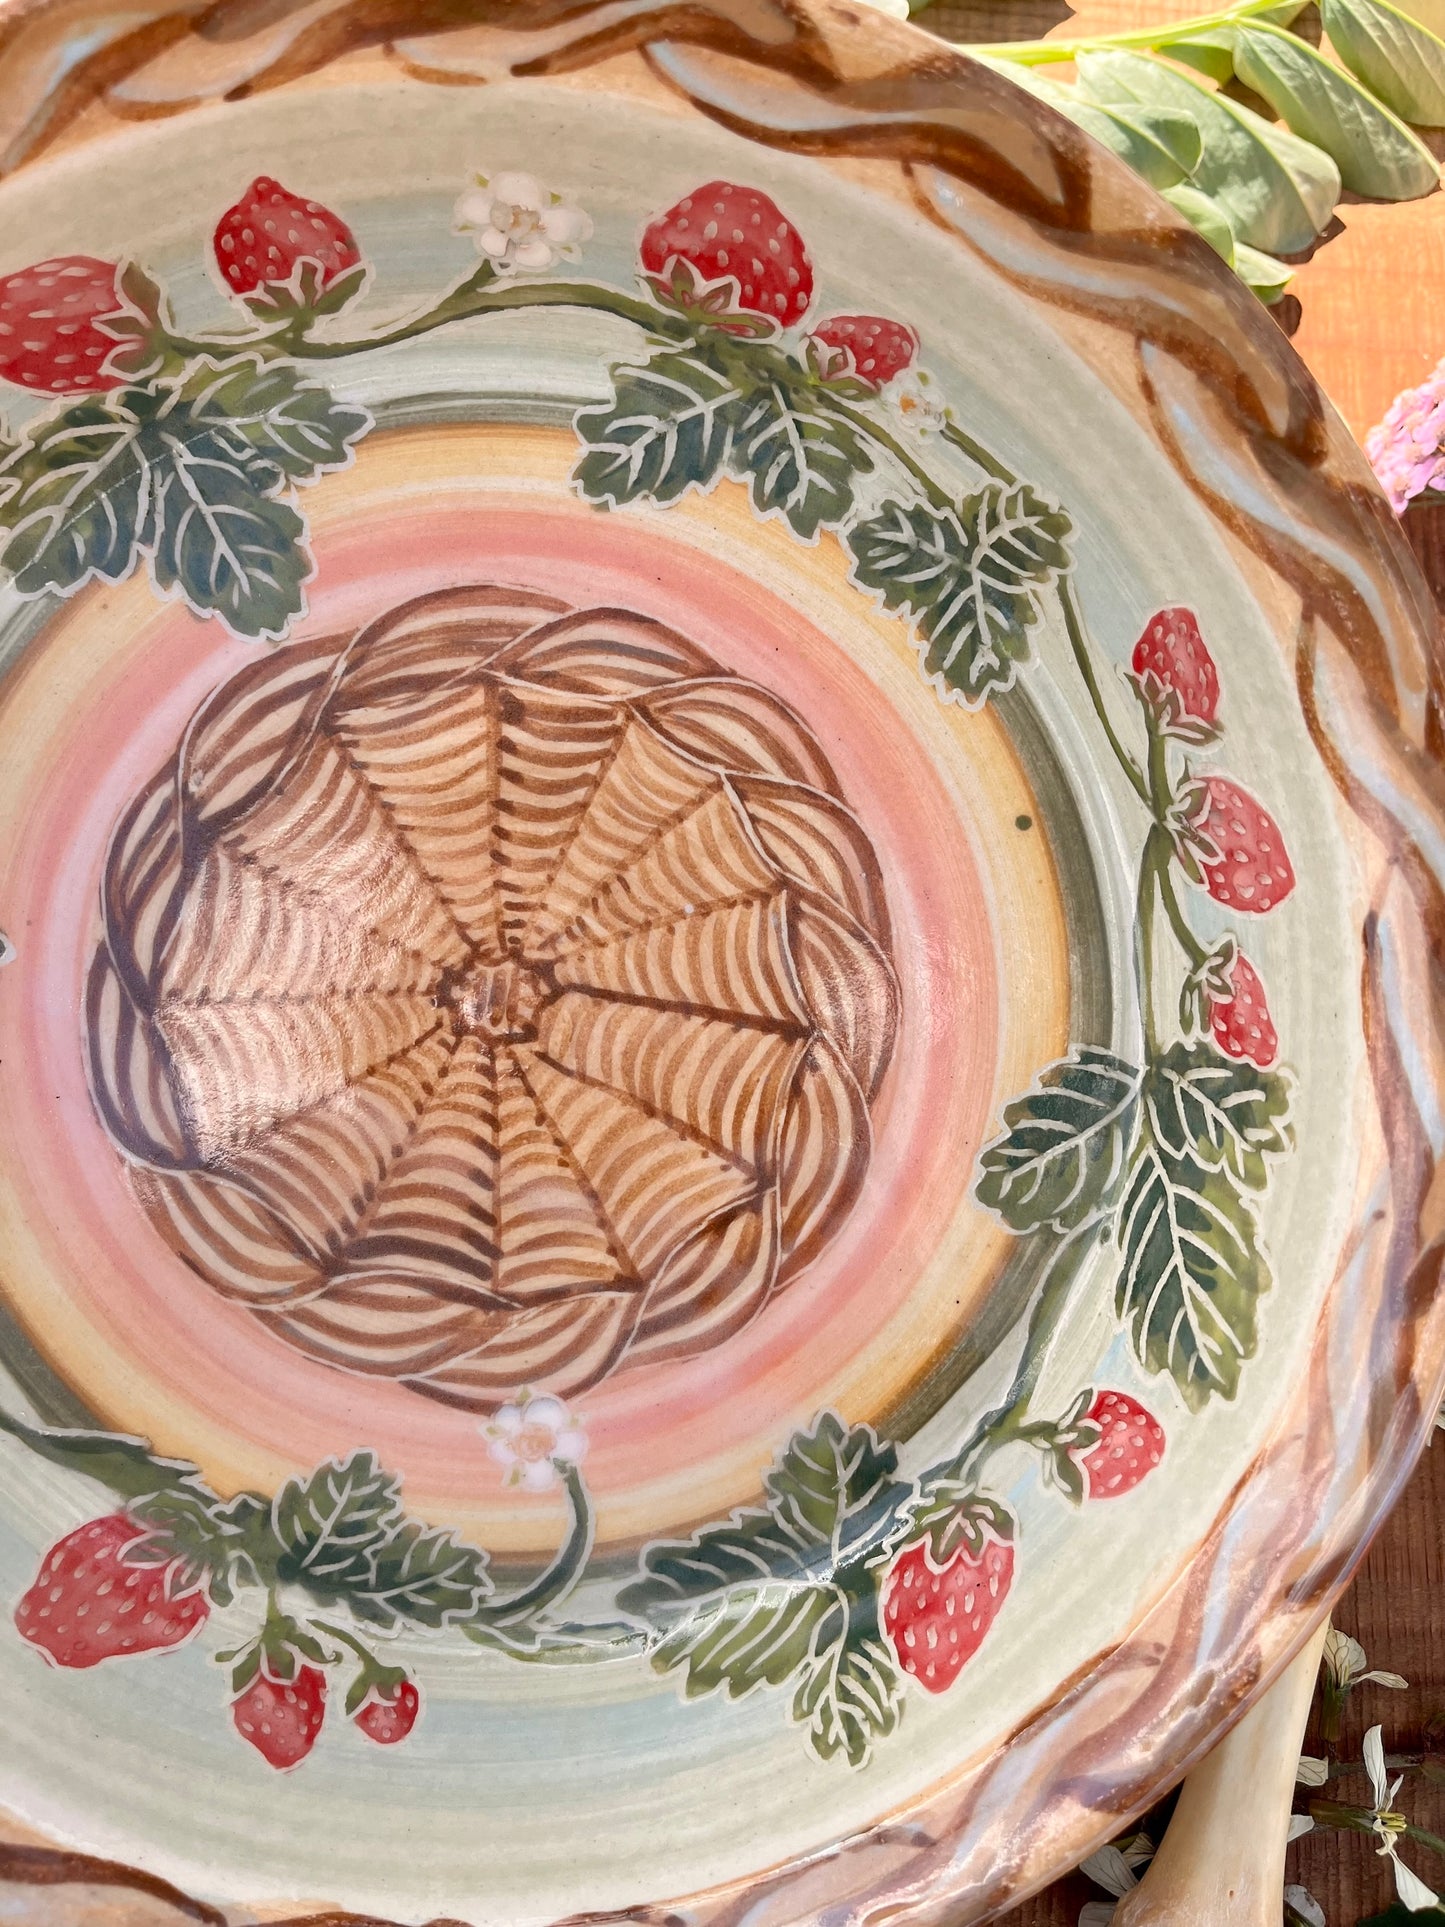 Pie Pan with Strawberry Basket - Baking Dish - Deep Dish Pie - Pie Dish - Pie Plate